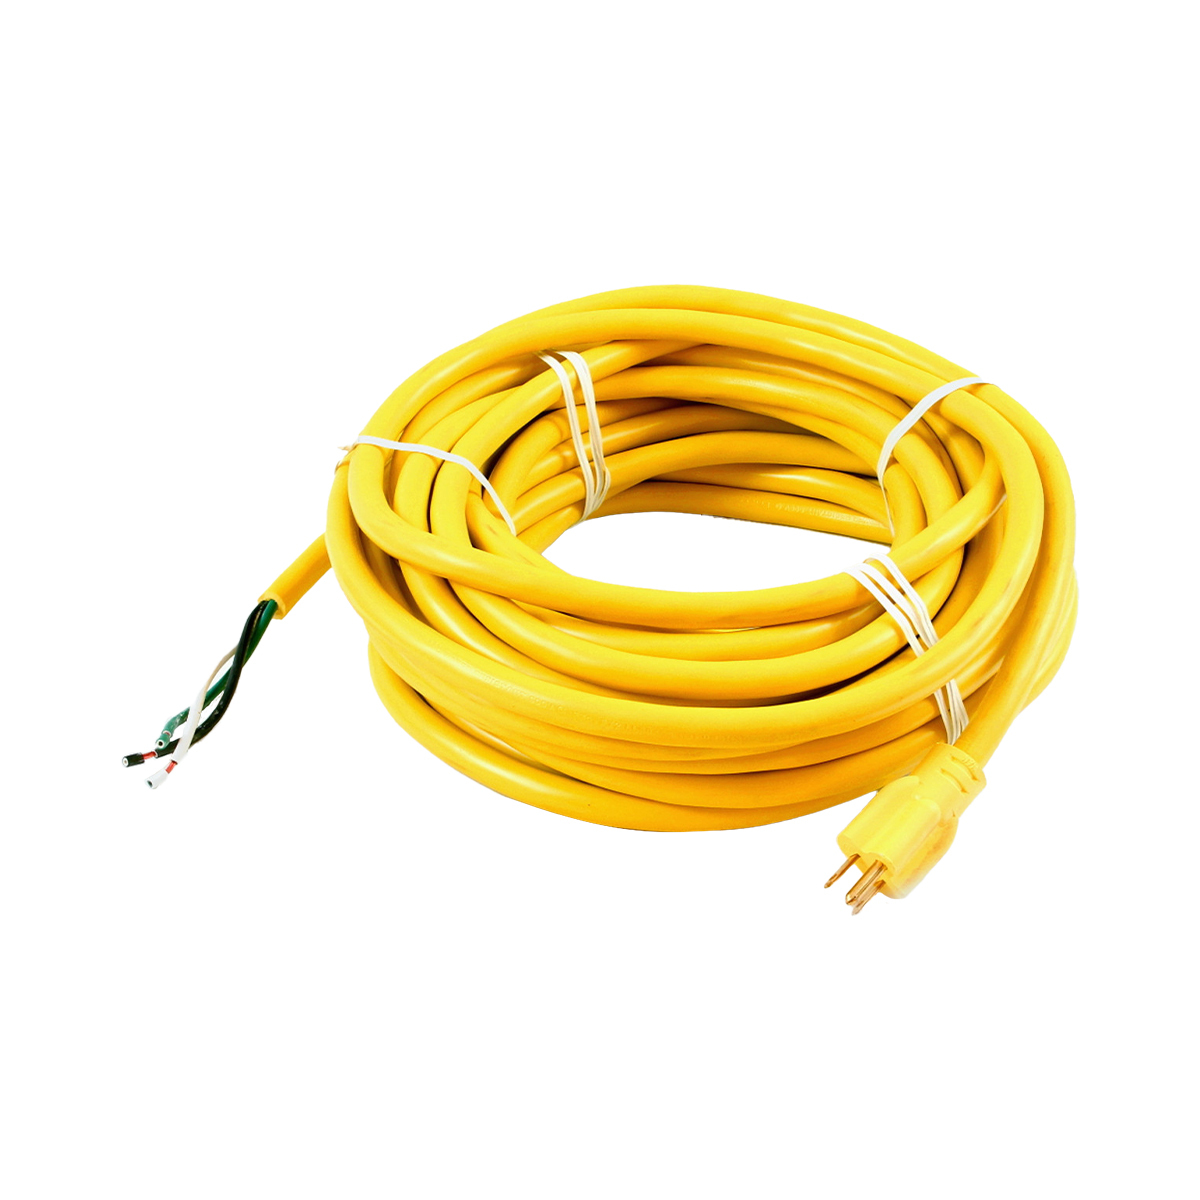 Viper 50' 14/3 Yellow 3-Prong Power Cord (VF45119)